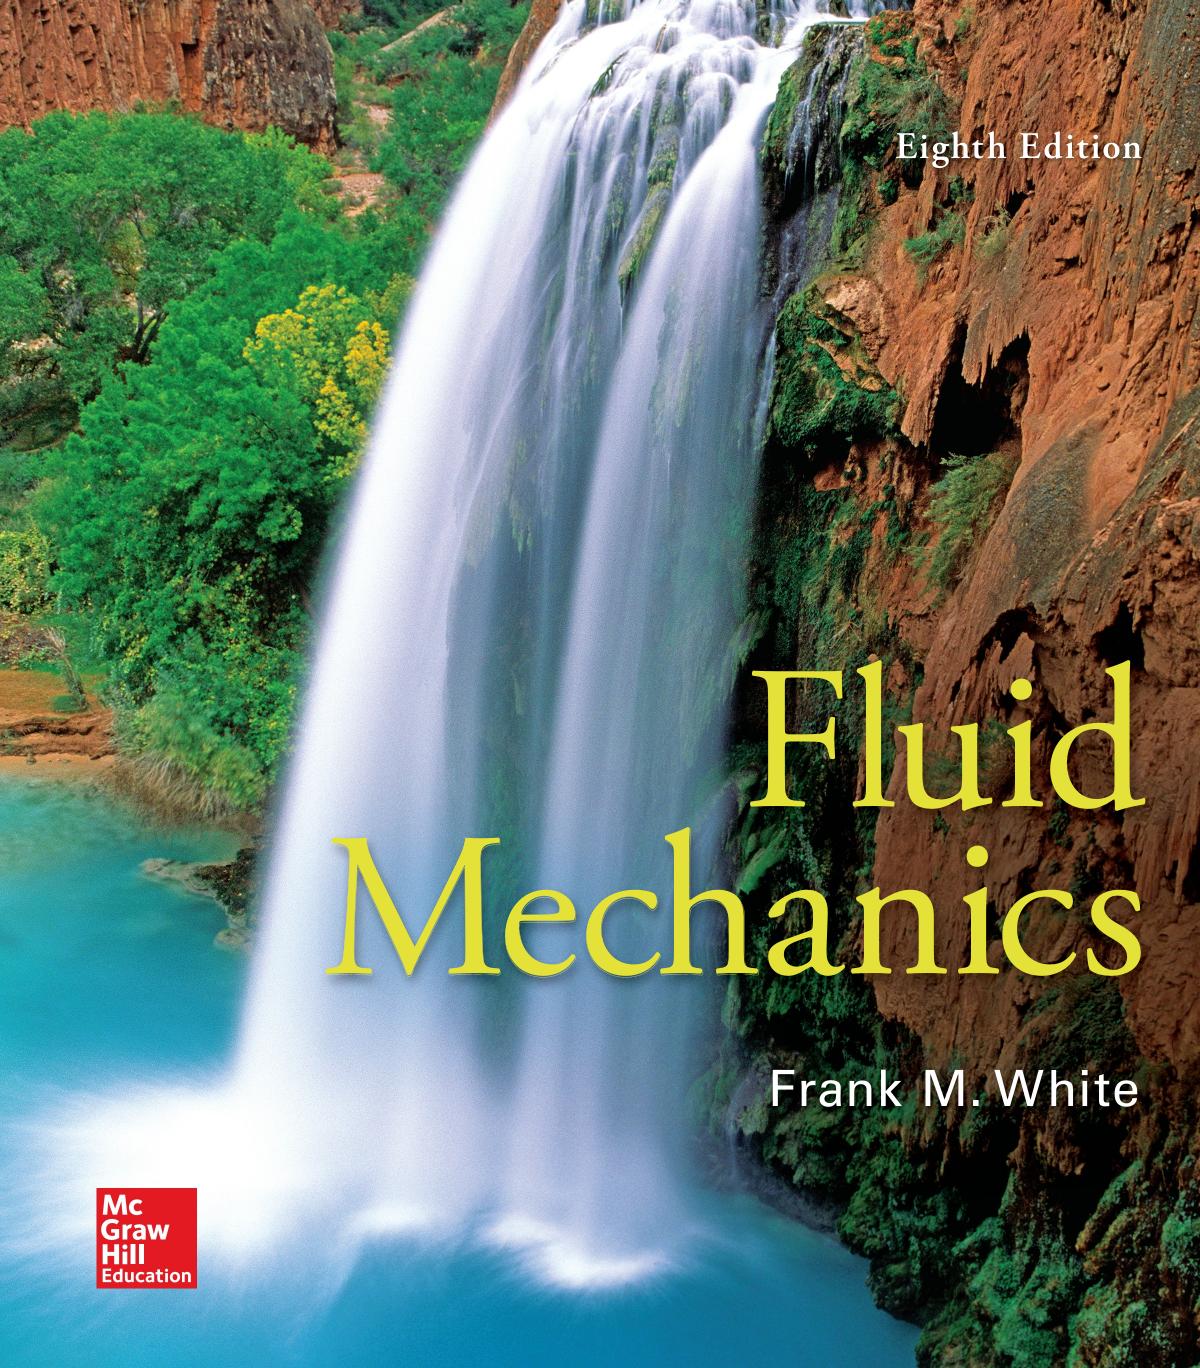 Fluid Mechanics Eighth Edition-Frank M. White.jpg